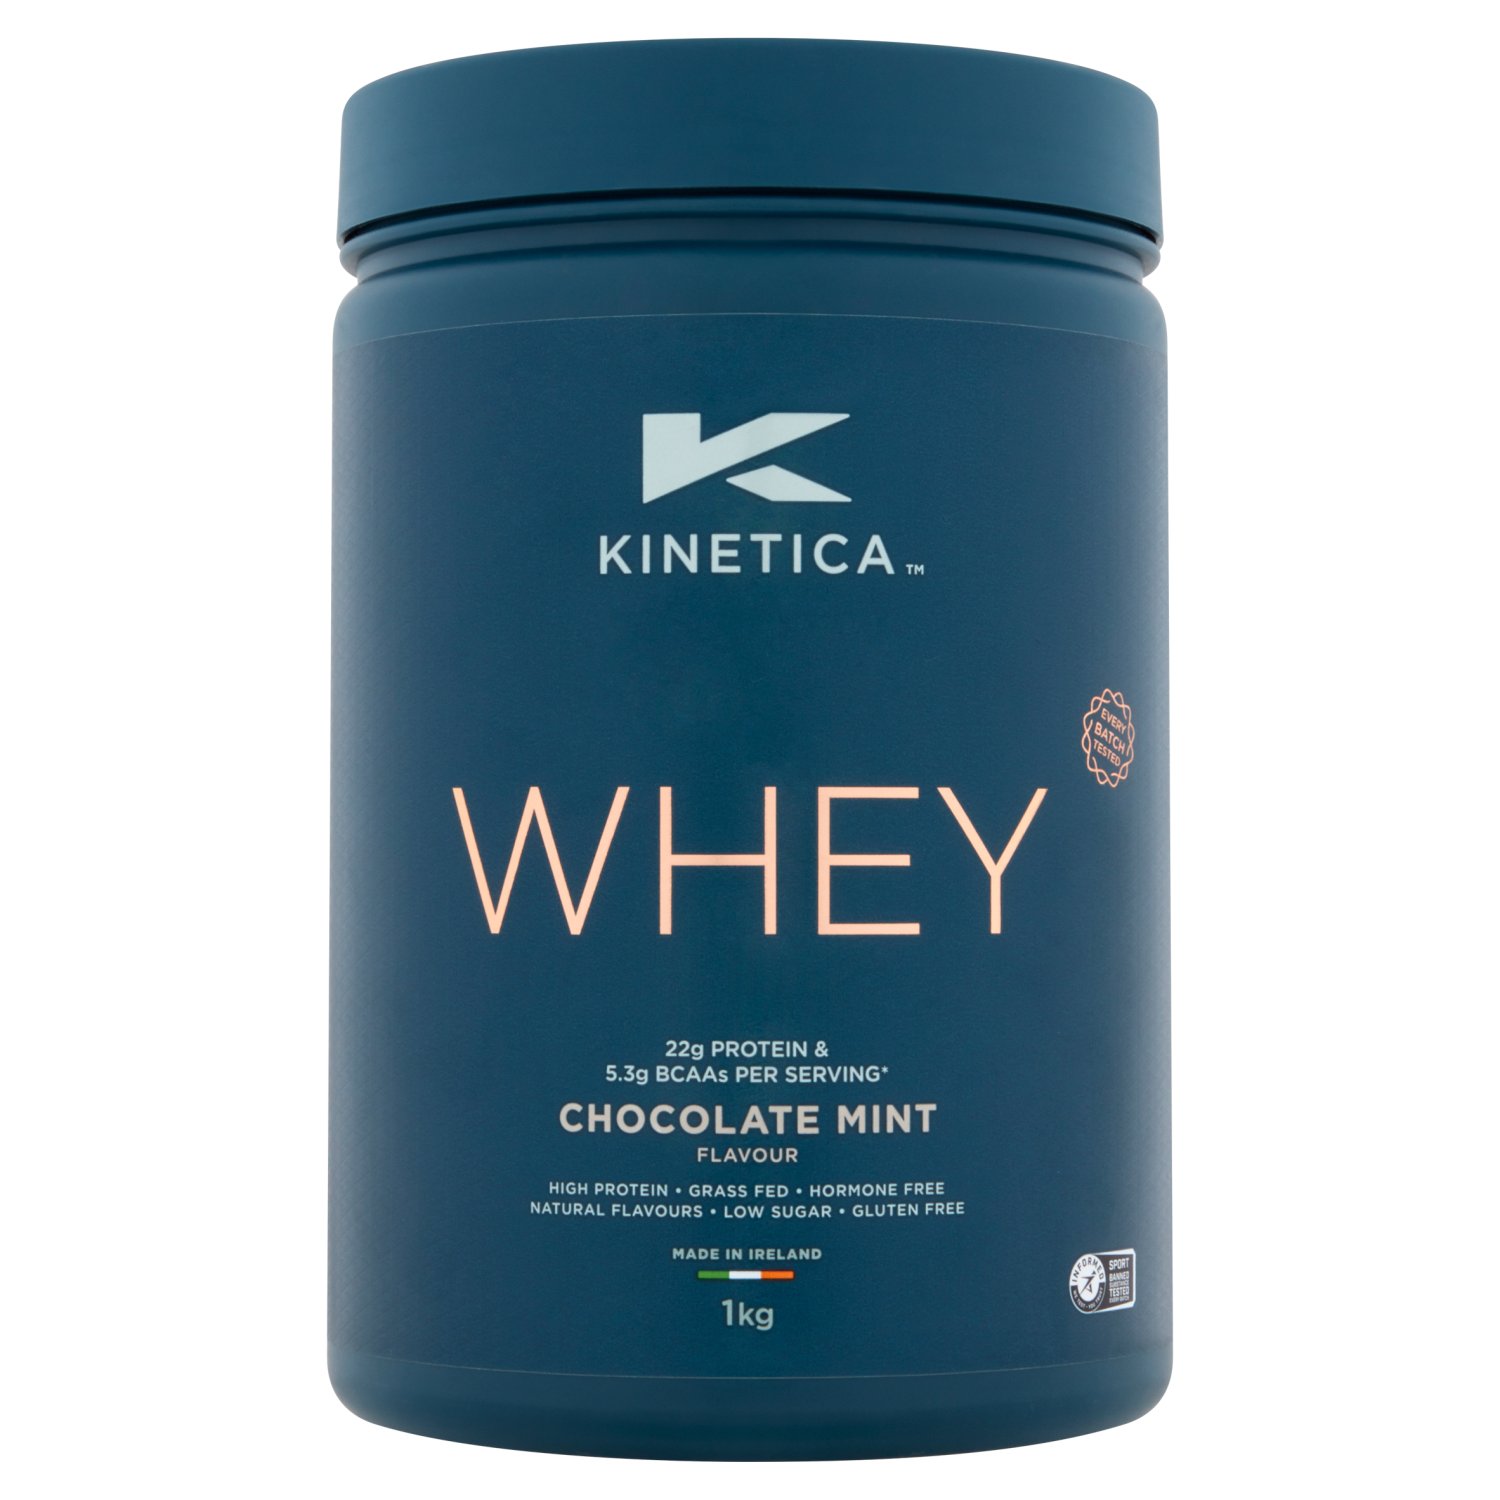 Kinetica Whey Protein Chocolate Mint (1 kg)